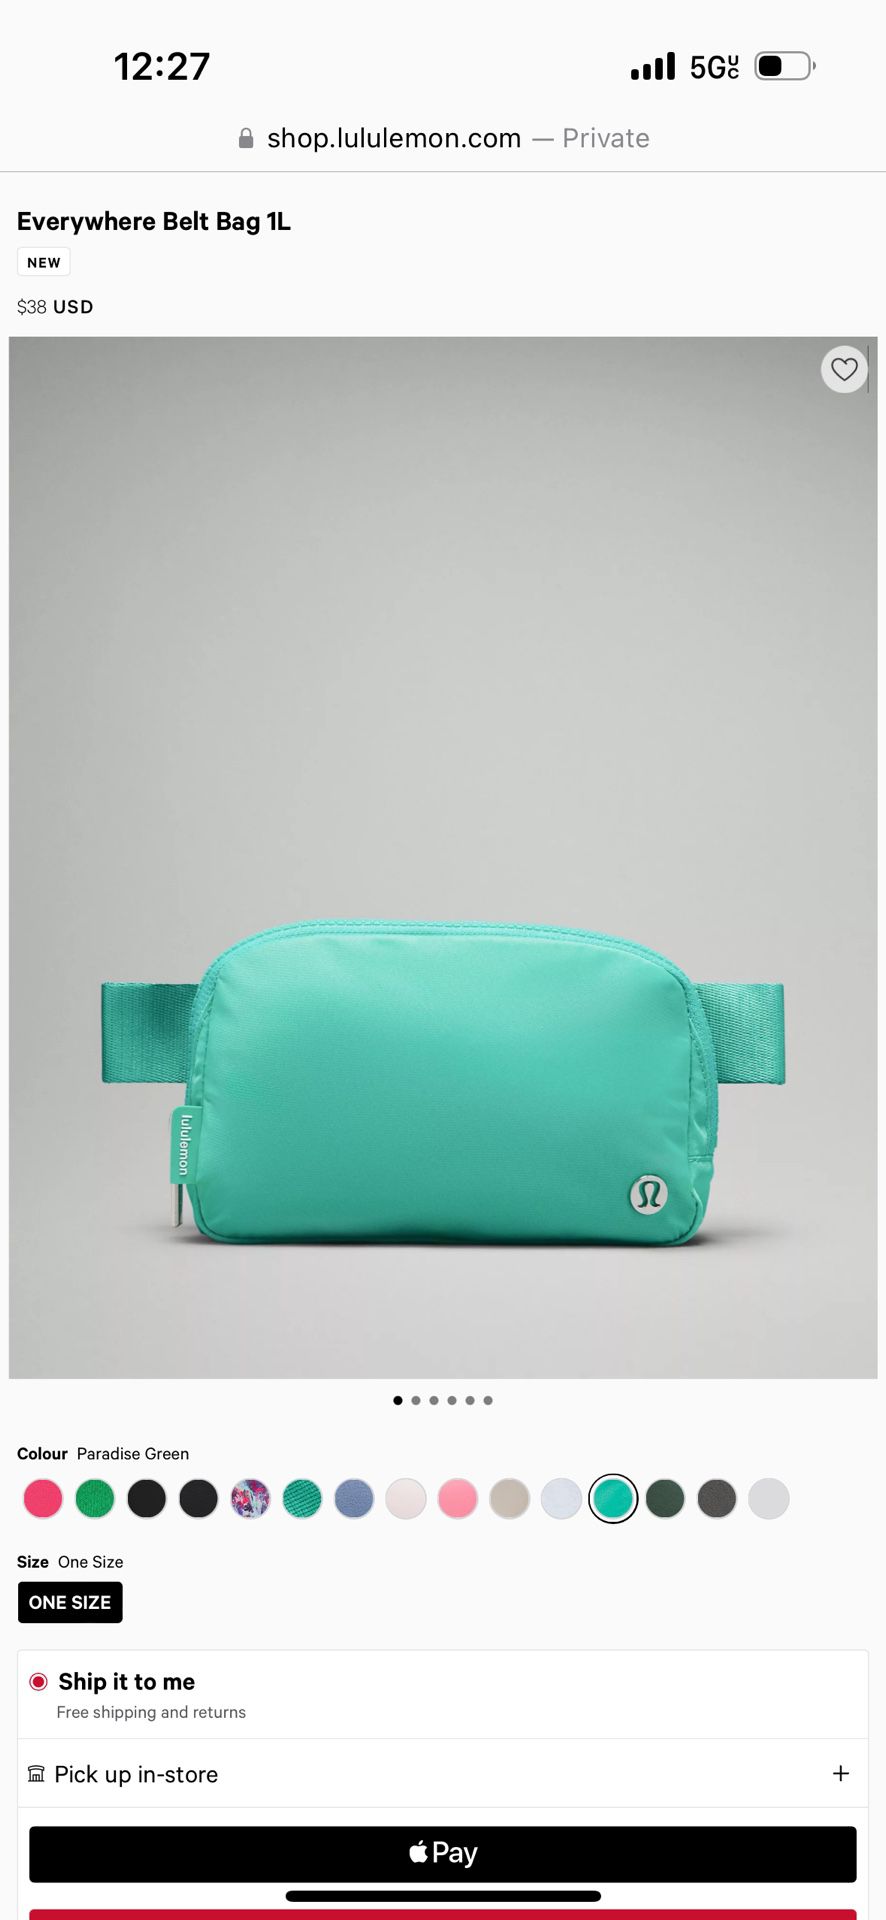 New lululemon belt bag 1L Paradise Green